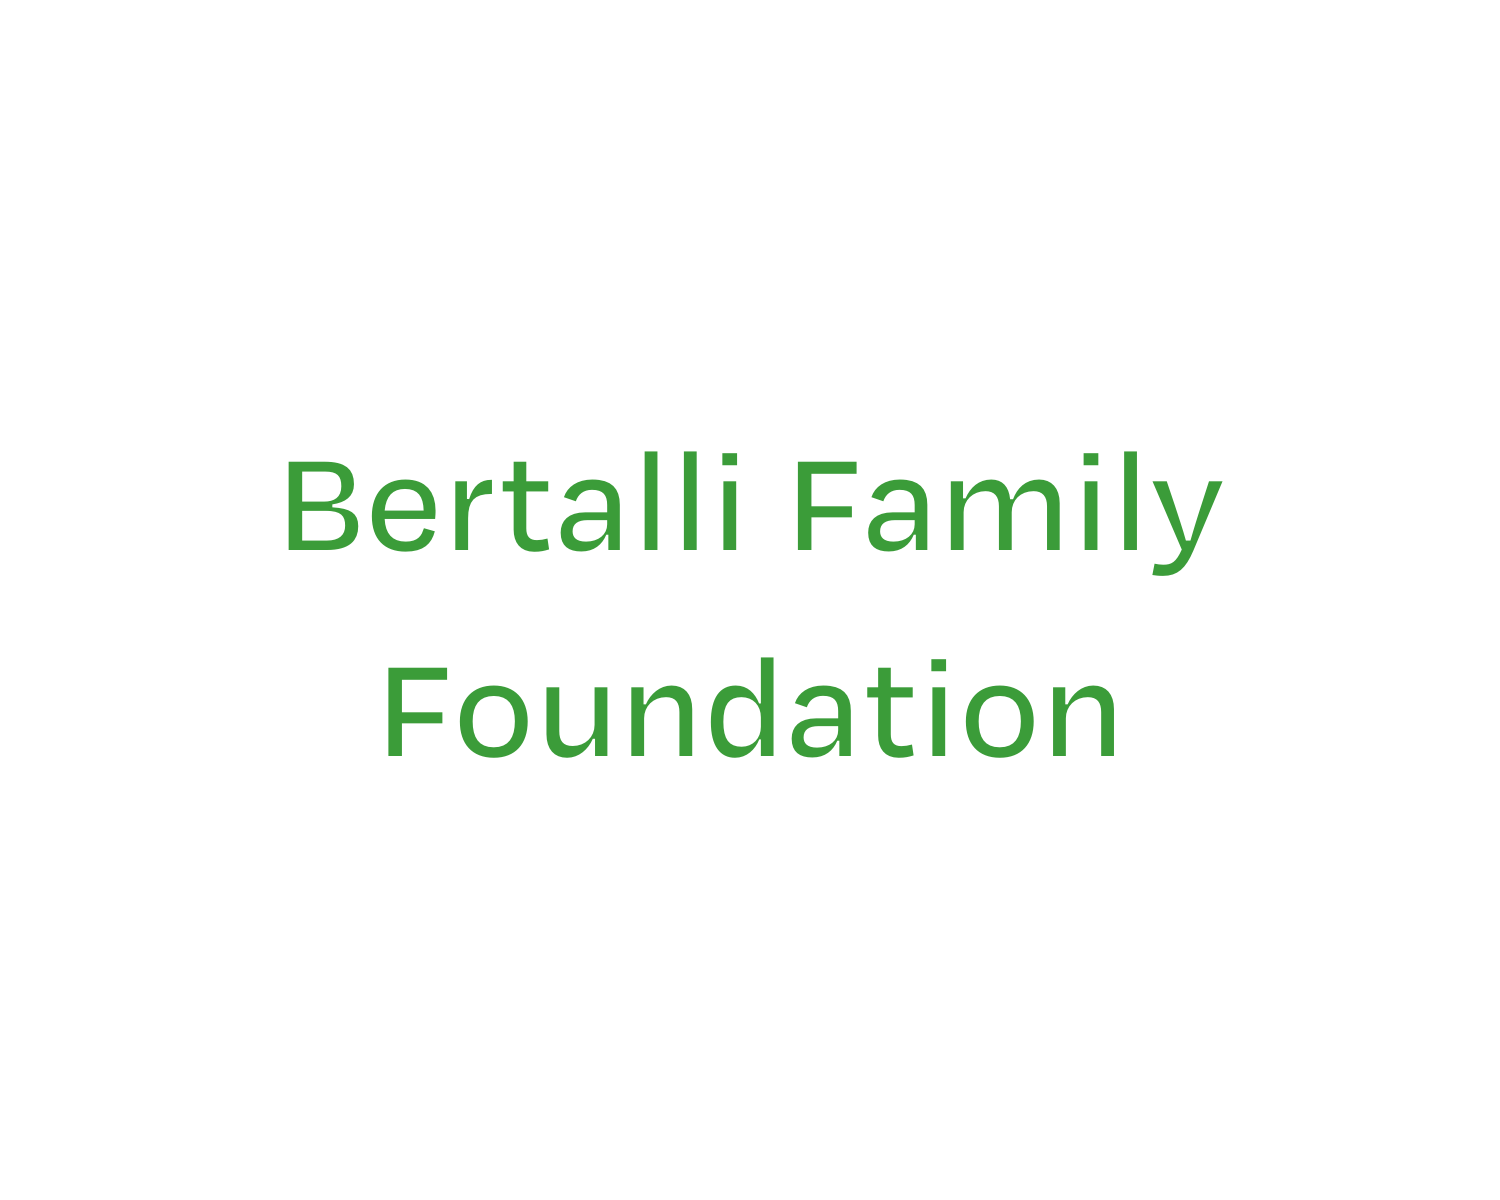 Bertalli Family Foundation